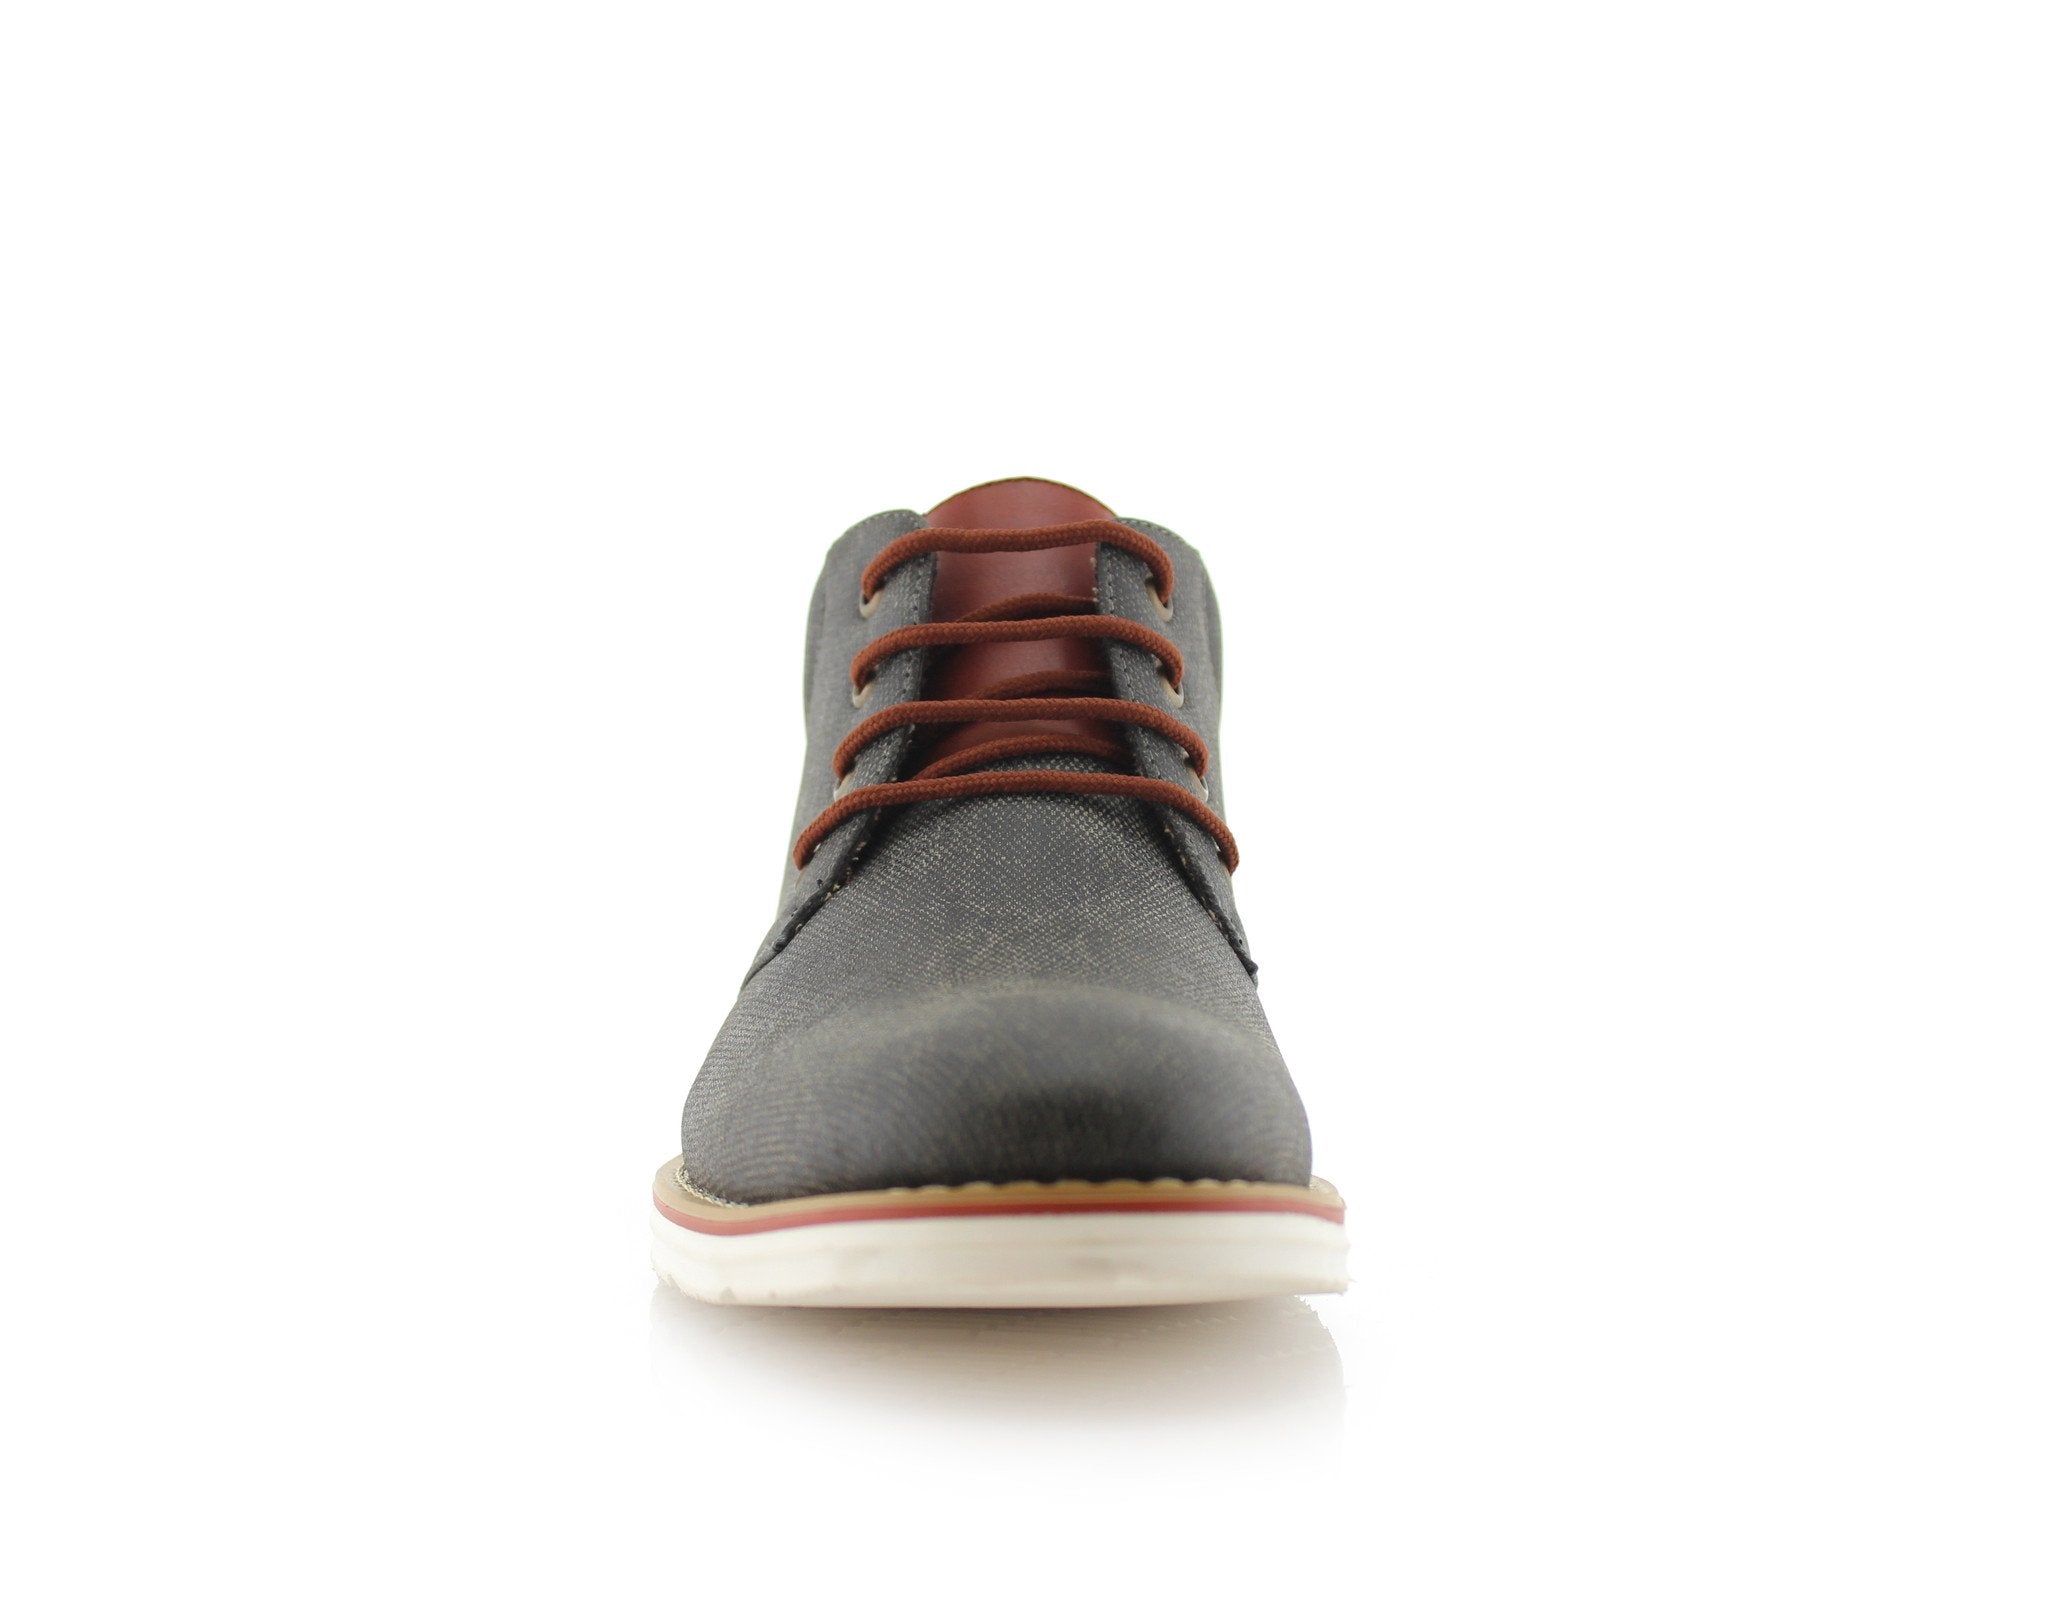 Two-Toned Chukka Sneaker Boots | Owen by Ferro Aldo | Conal Footwear | Front Angle View